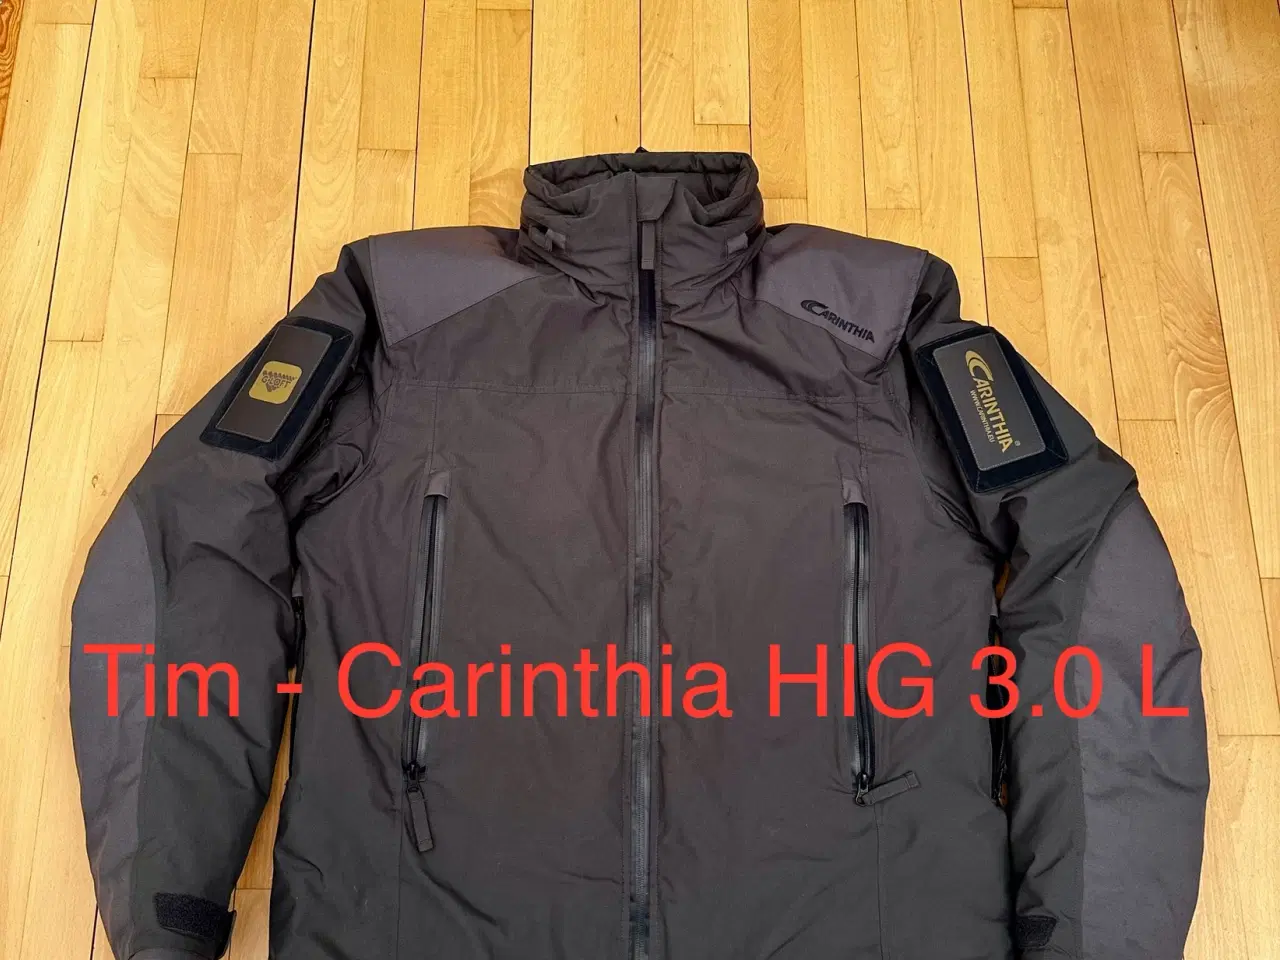 Billede 1 - Carinthia HIG 3.0 L 